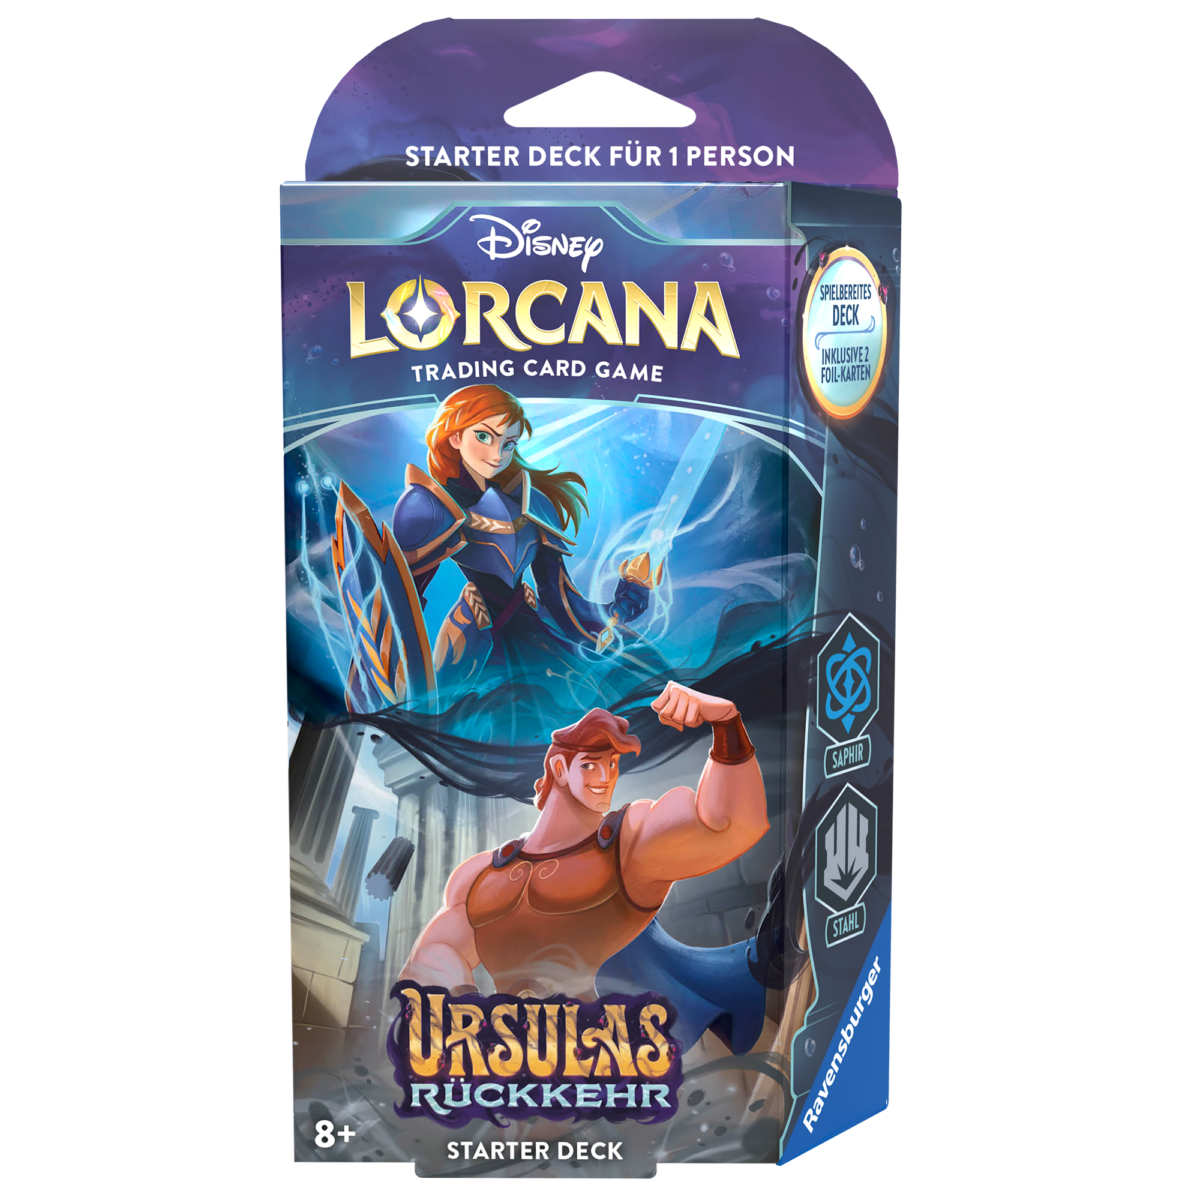 Disney Lorcana Trading Card Game: Kapitel 4 - Ursulas Rückkehr: Starter Deck Saphir & Stahl